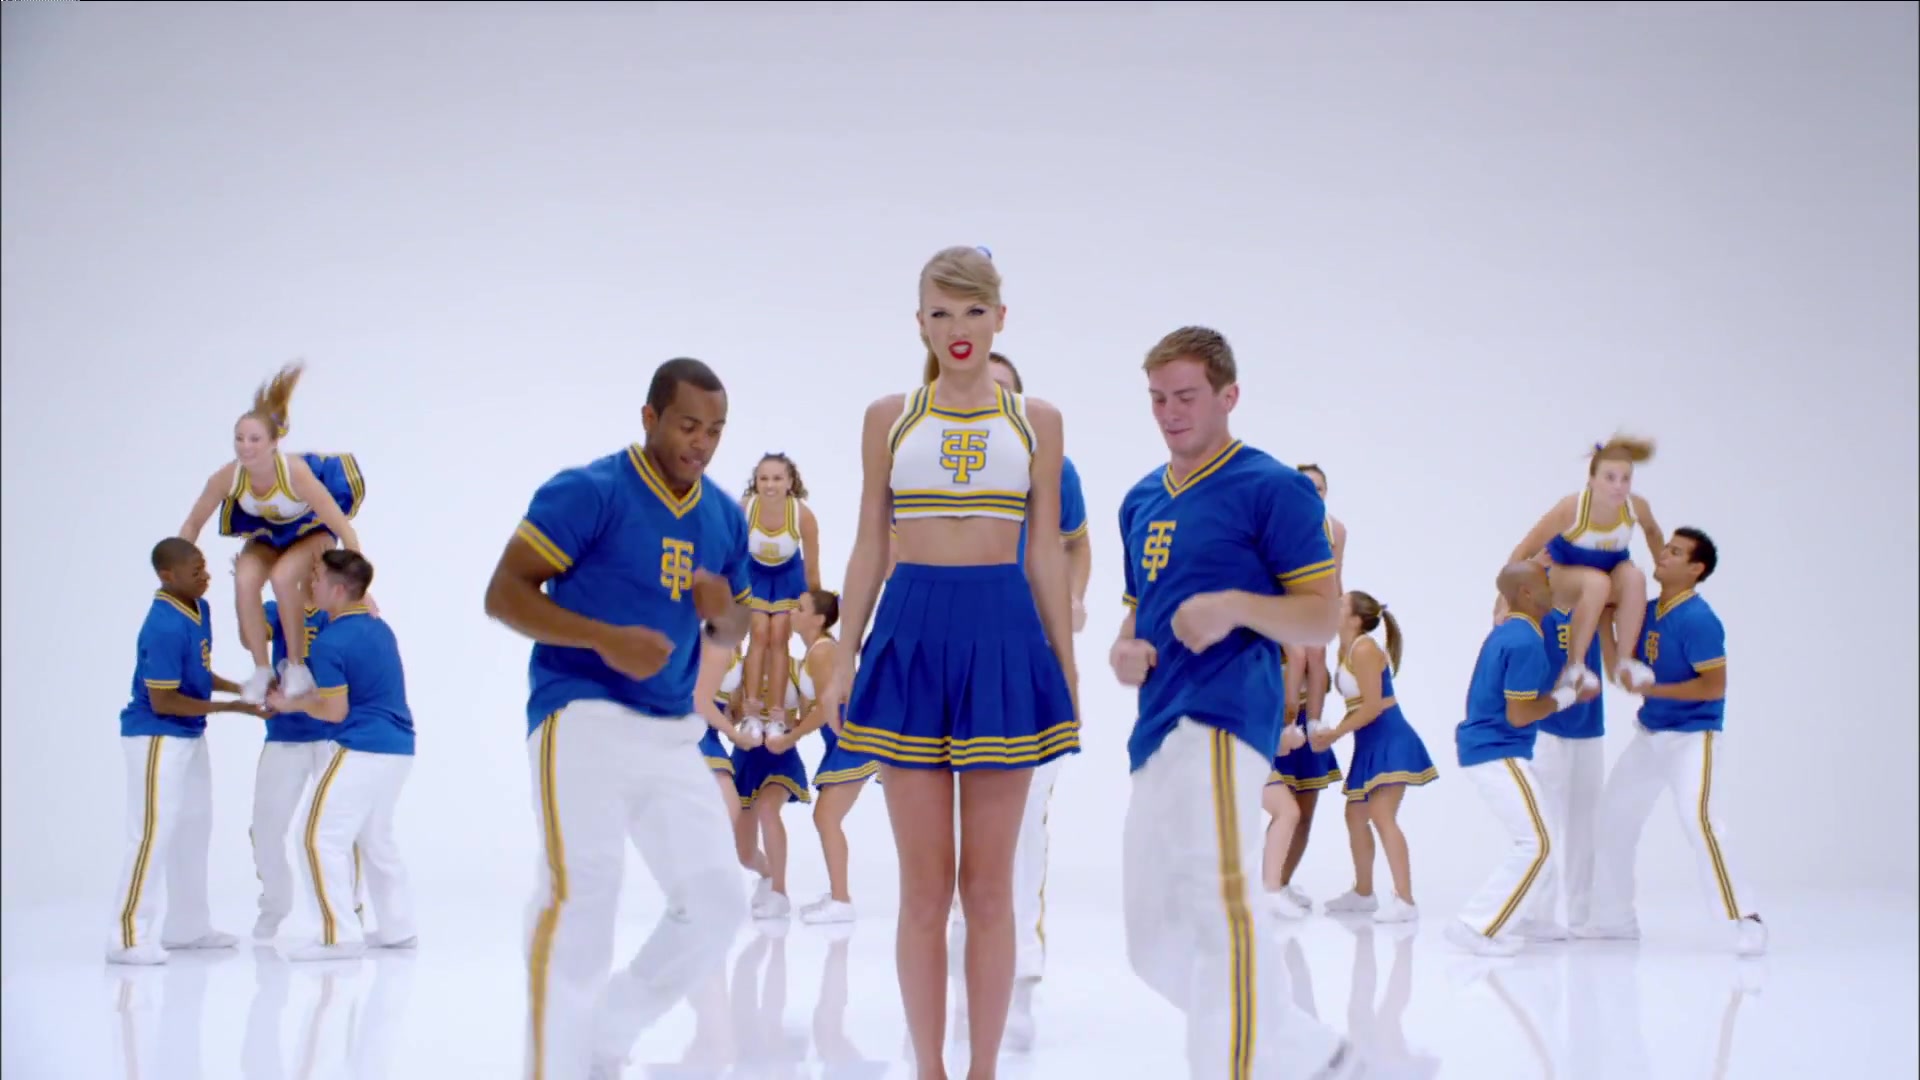 Taylor Swift in Shake it Off video